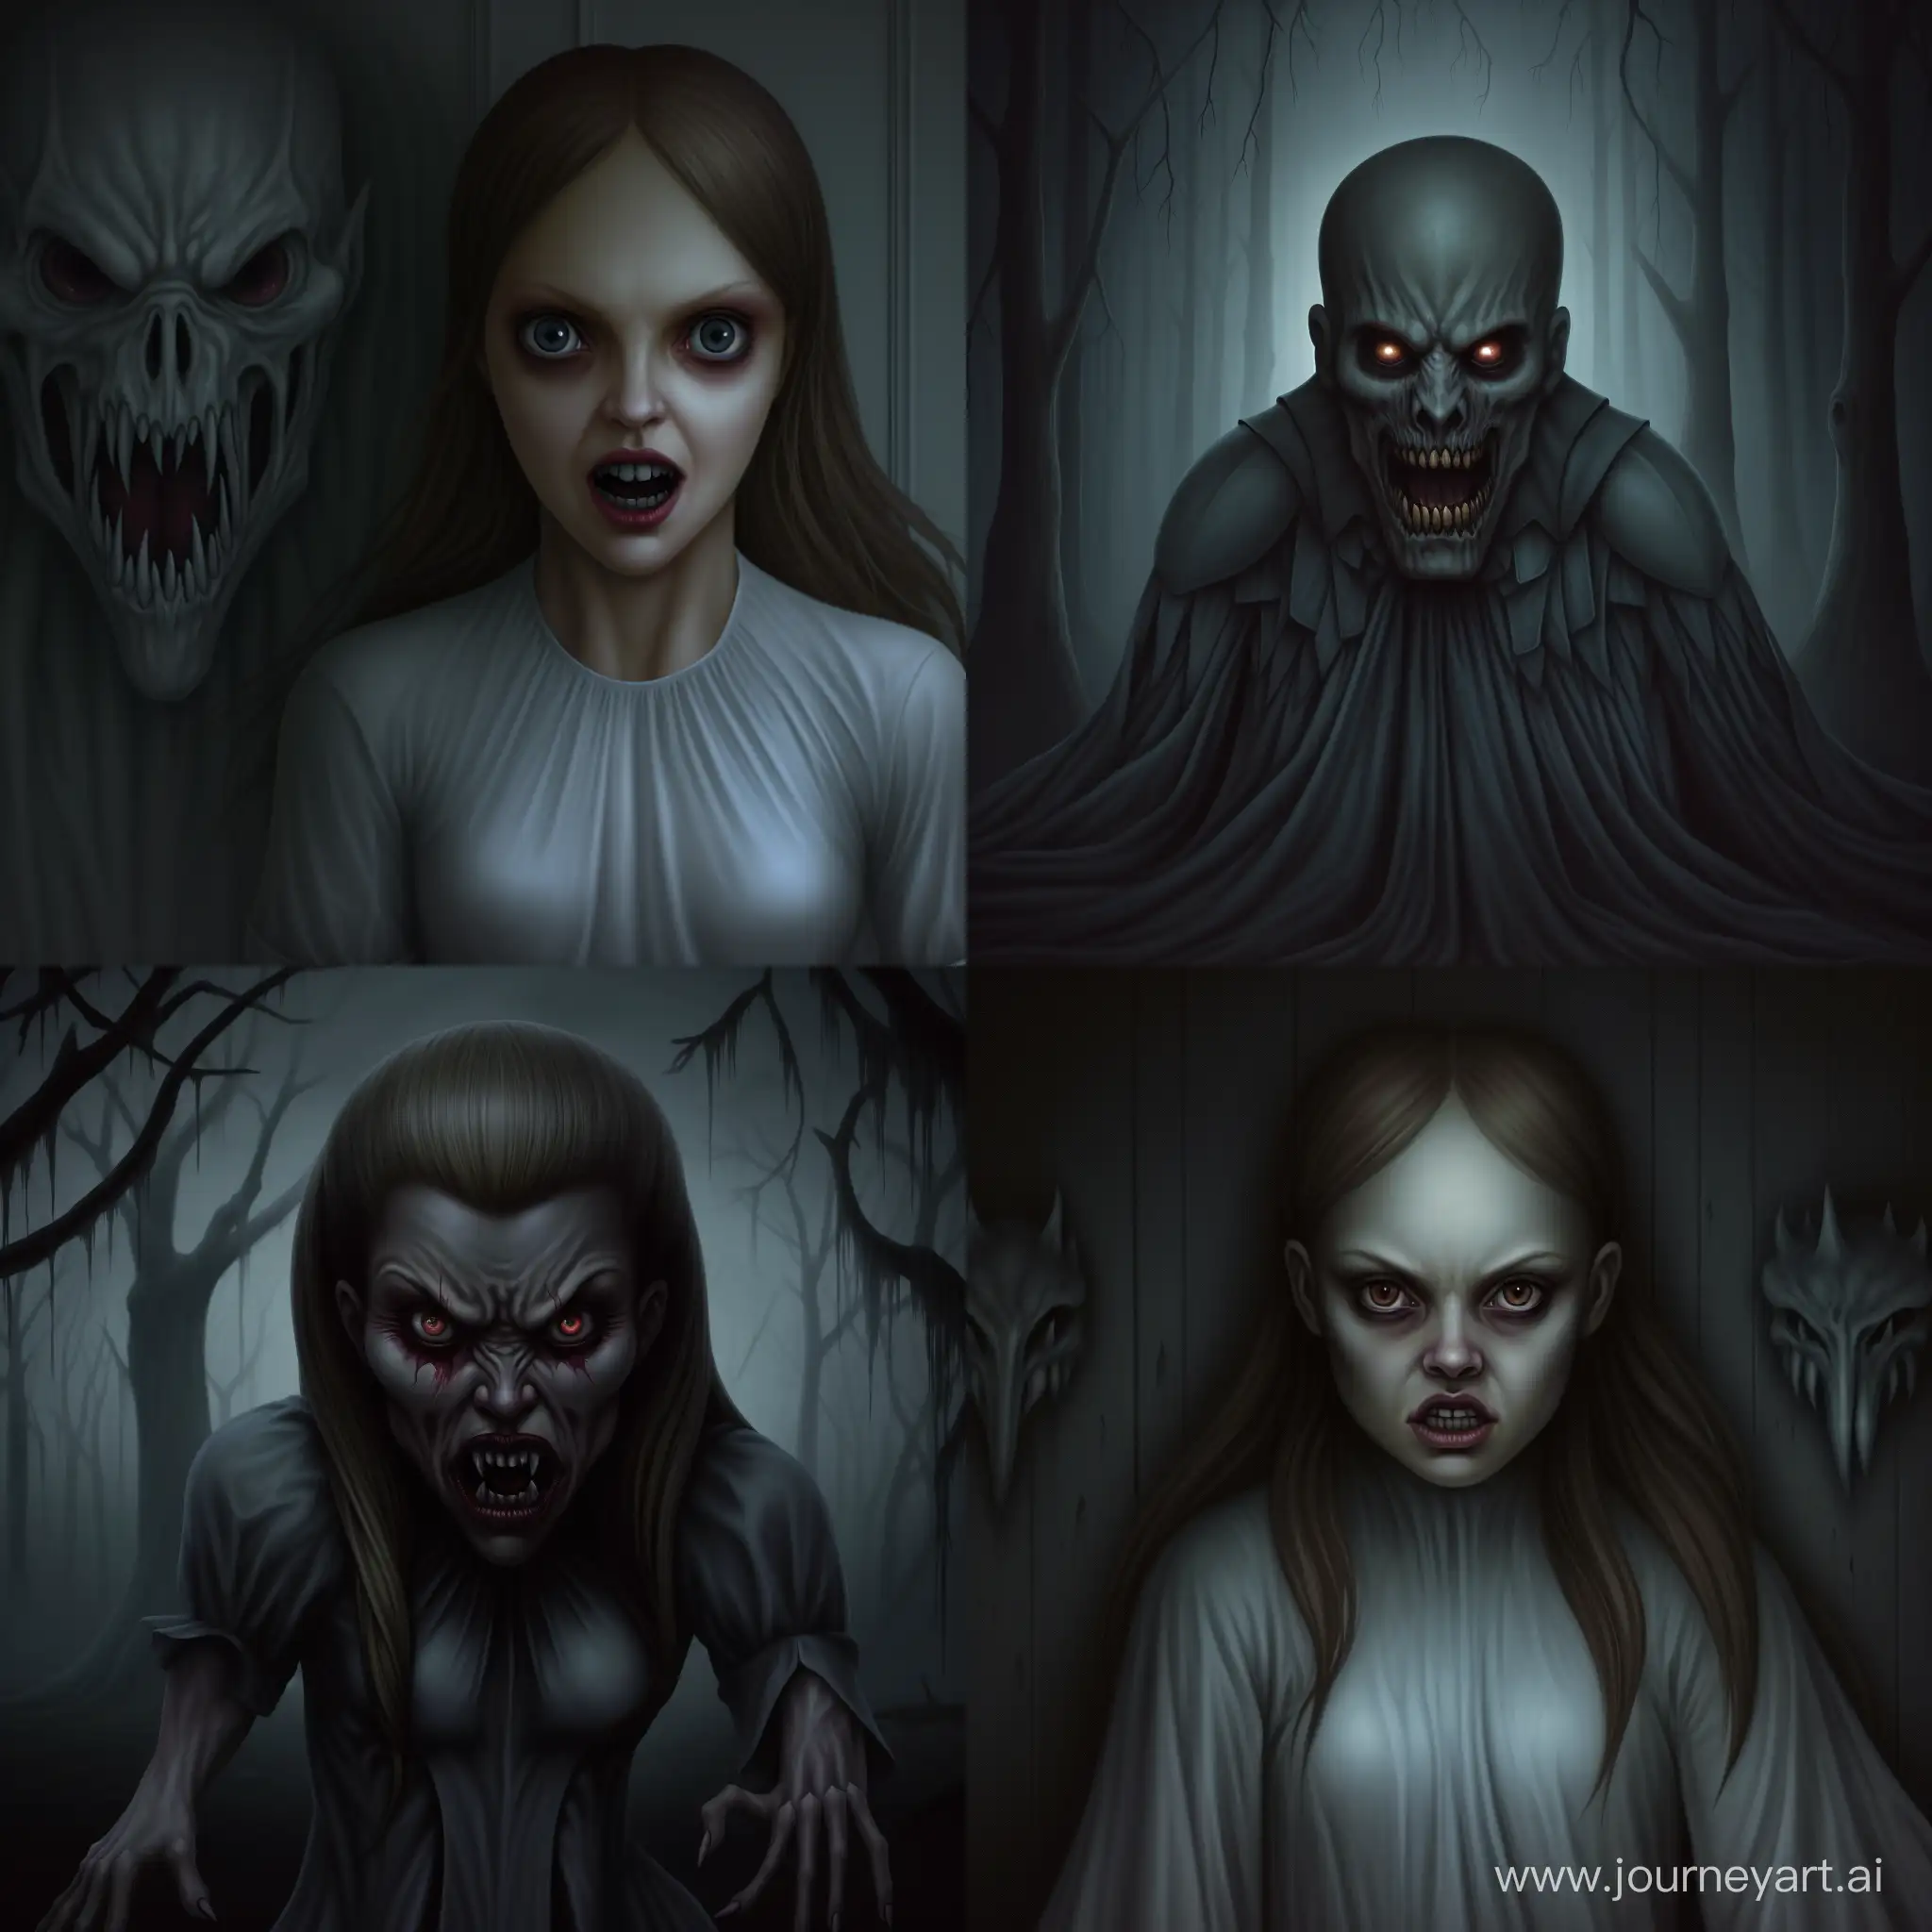 Terrified-Girl-Confronts-ThreadEyed-Monster-in-Hyperrealistic-8K-Image